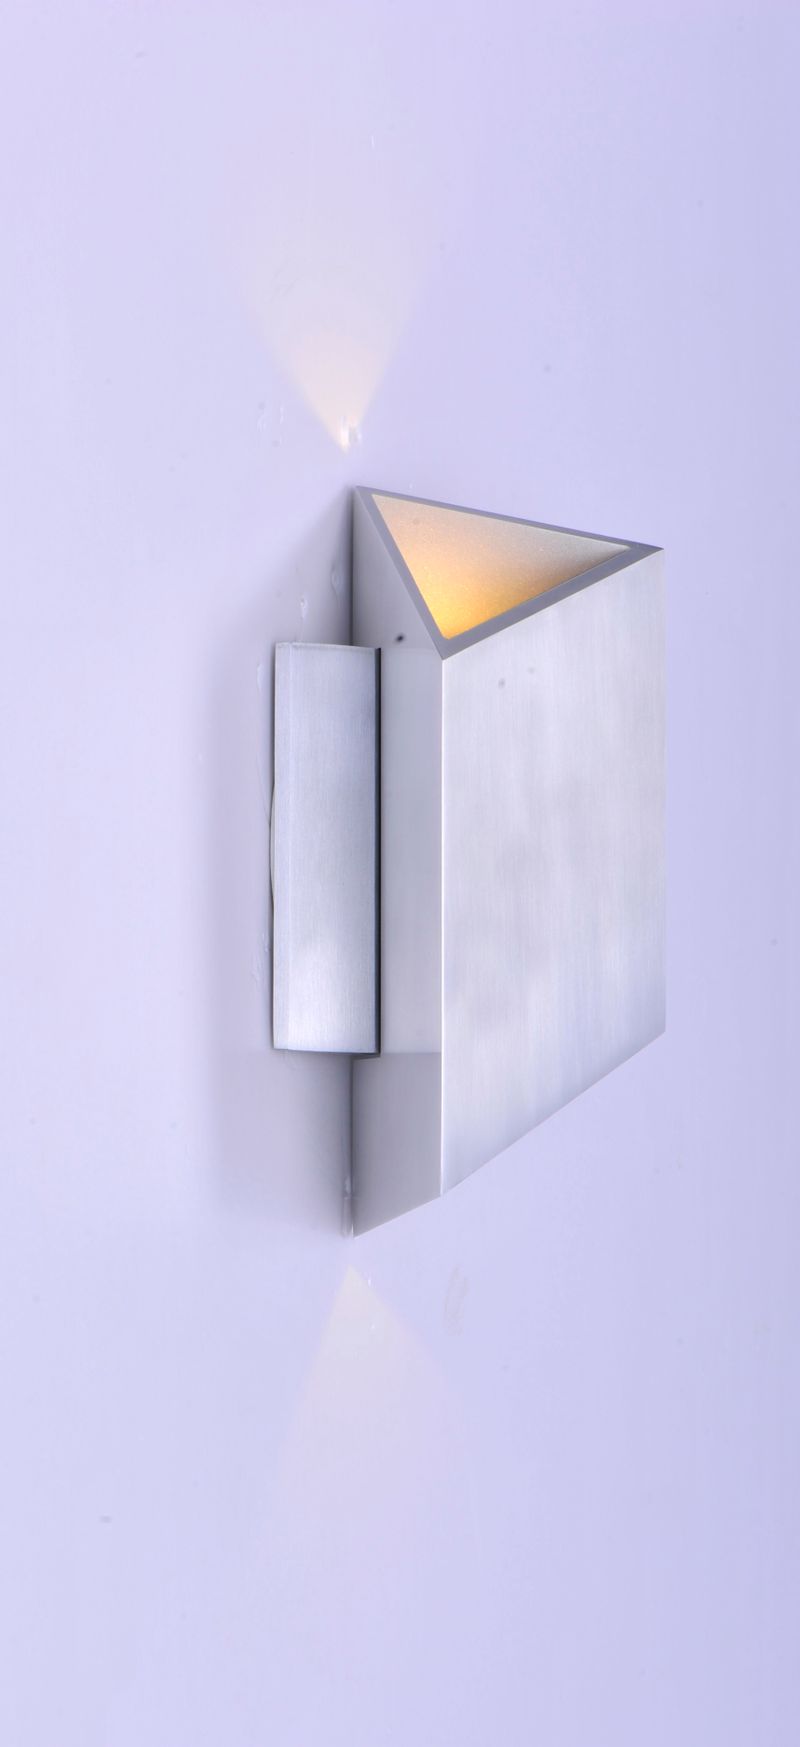 Alumilux Sconce 7' 2 Light Outdoor Wall Mount Light in Satin Aluminum